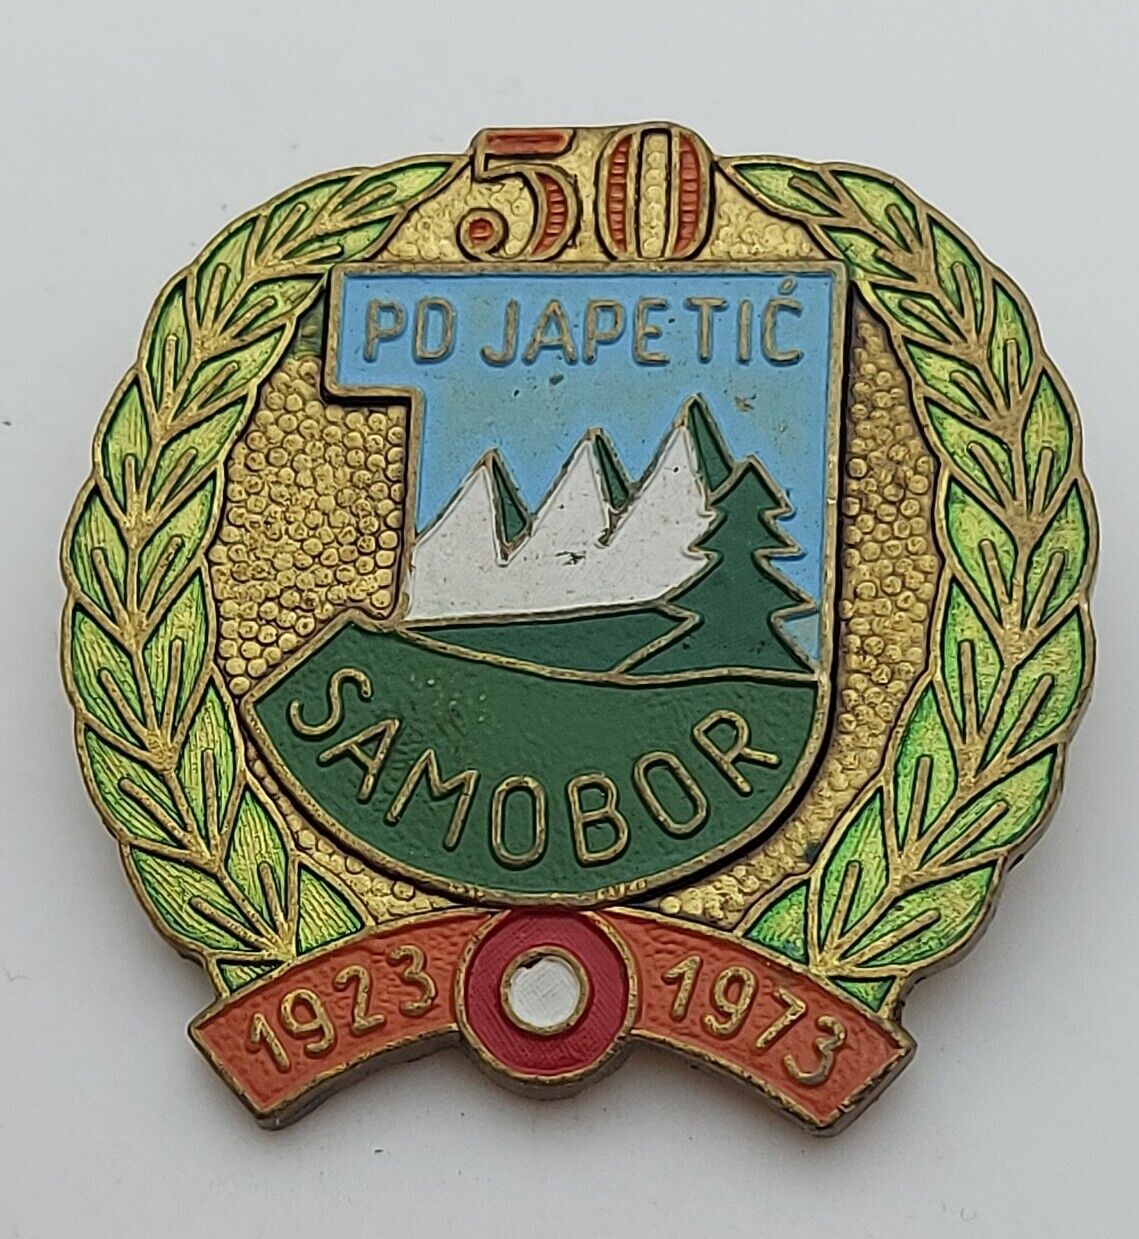 Mountaineering Club JAPETIC - SAMOBOR Croatia vintage pin badge from 1923/73 BIG